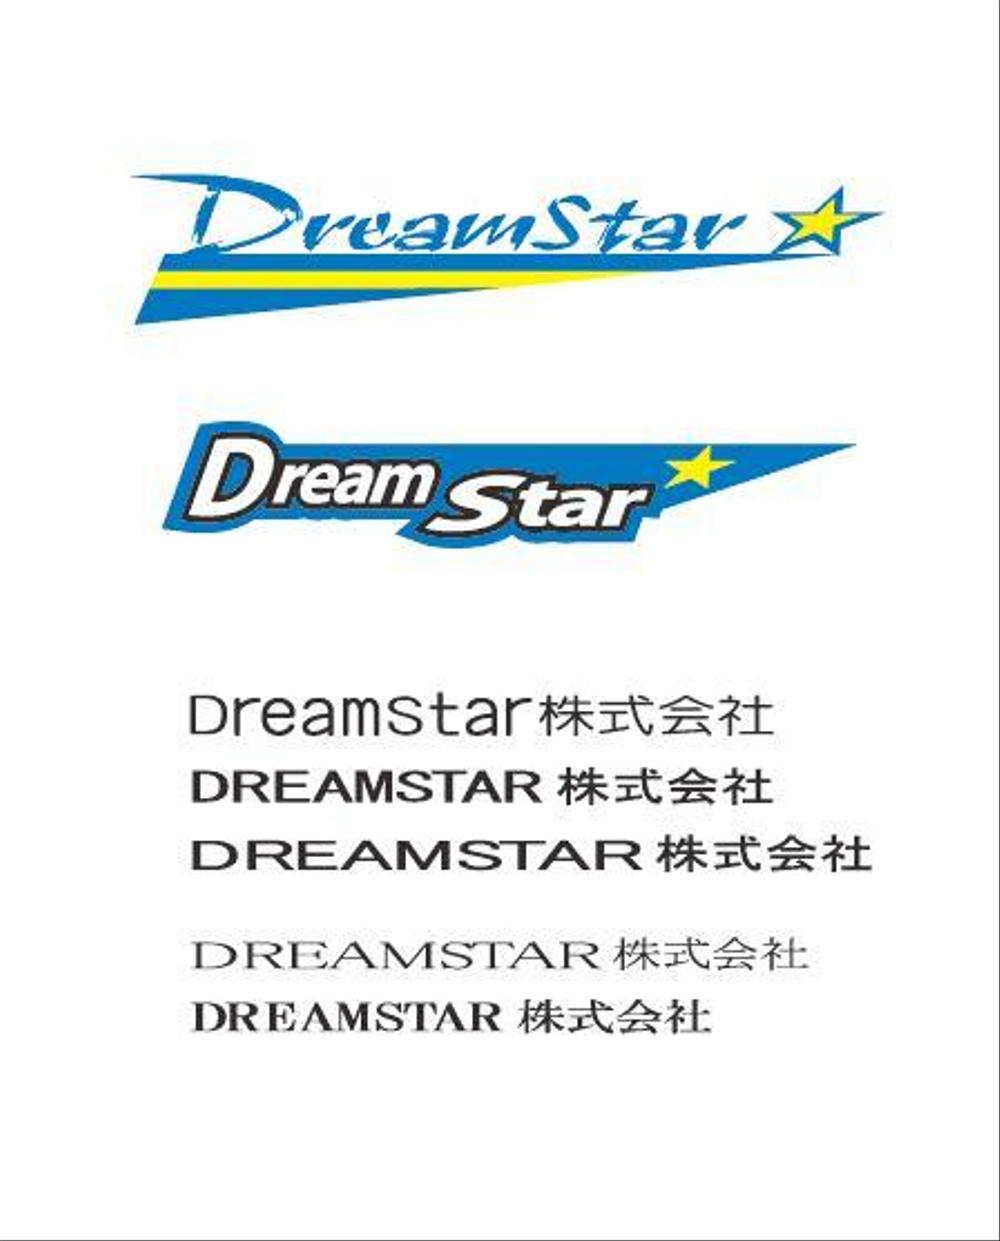 DREAMSTAR株式会社001.jpg